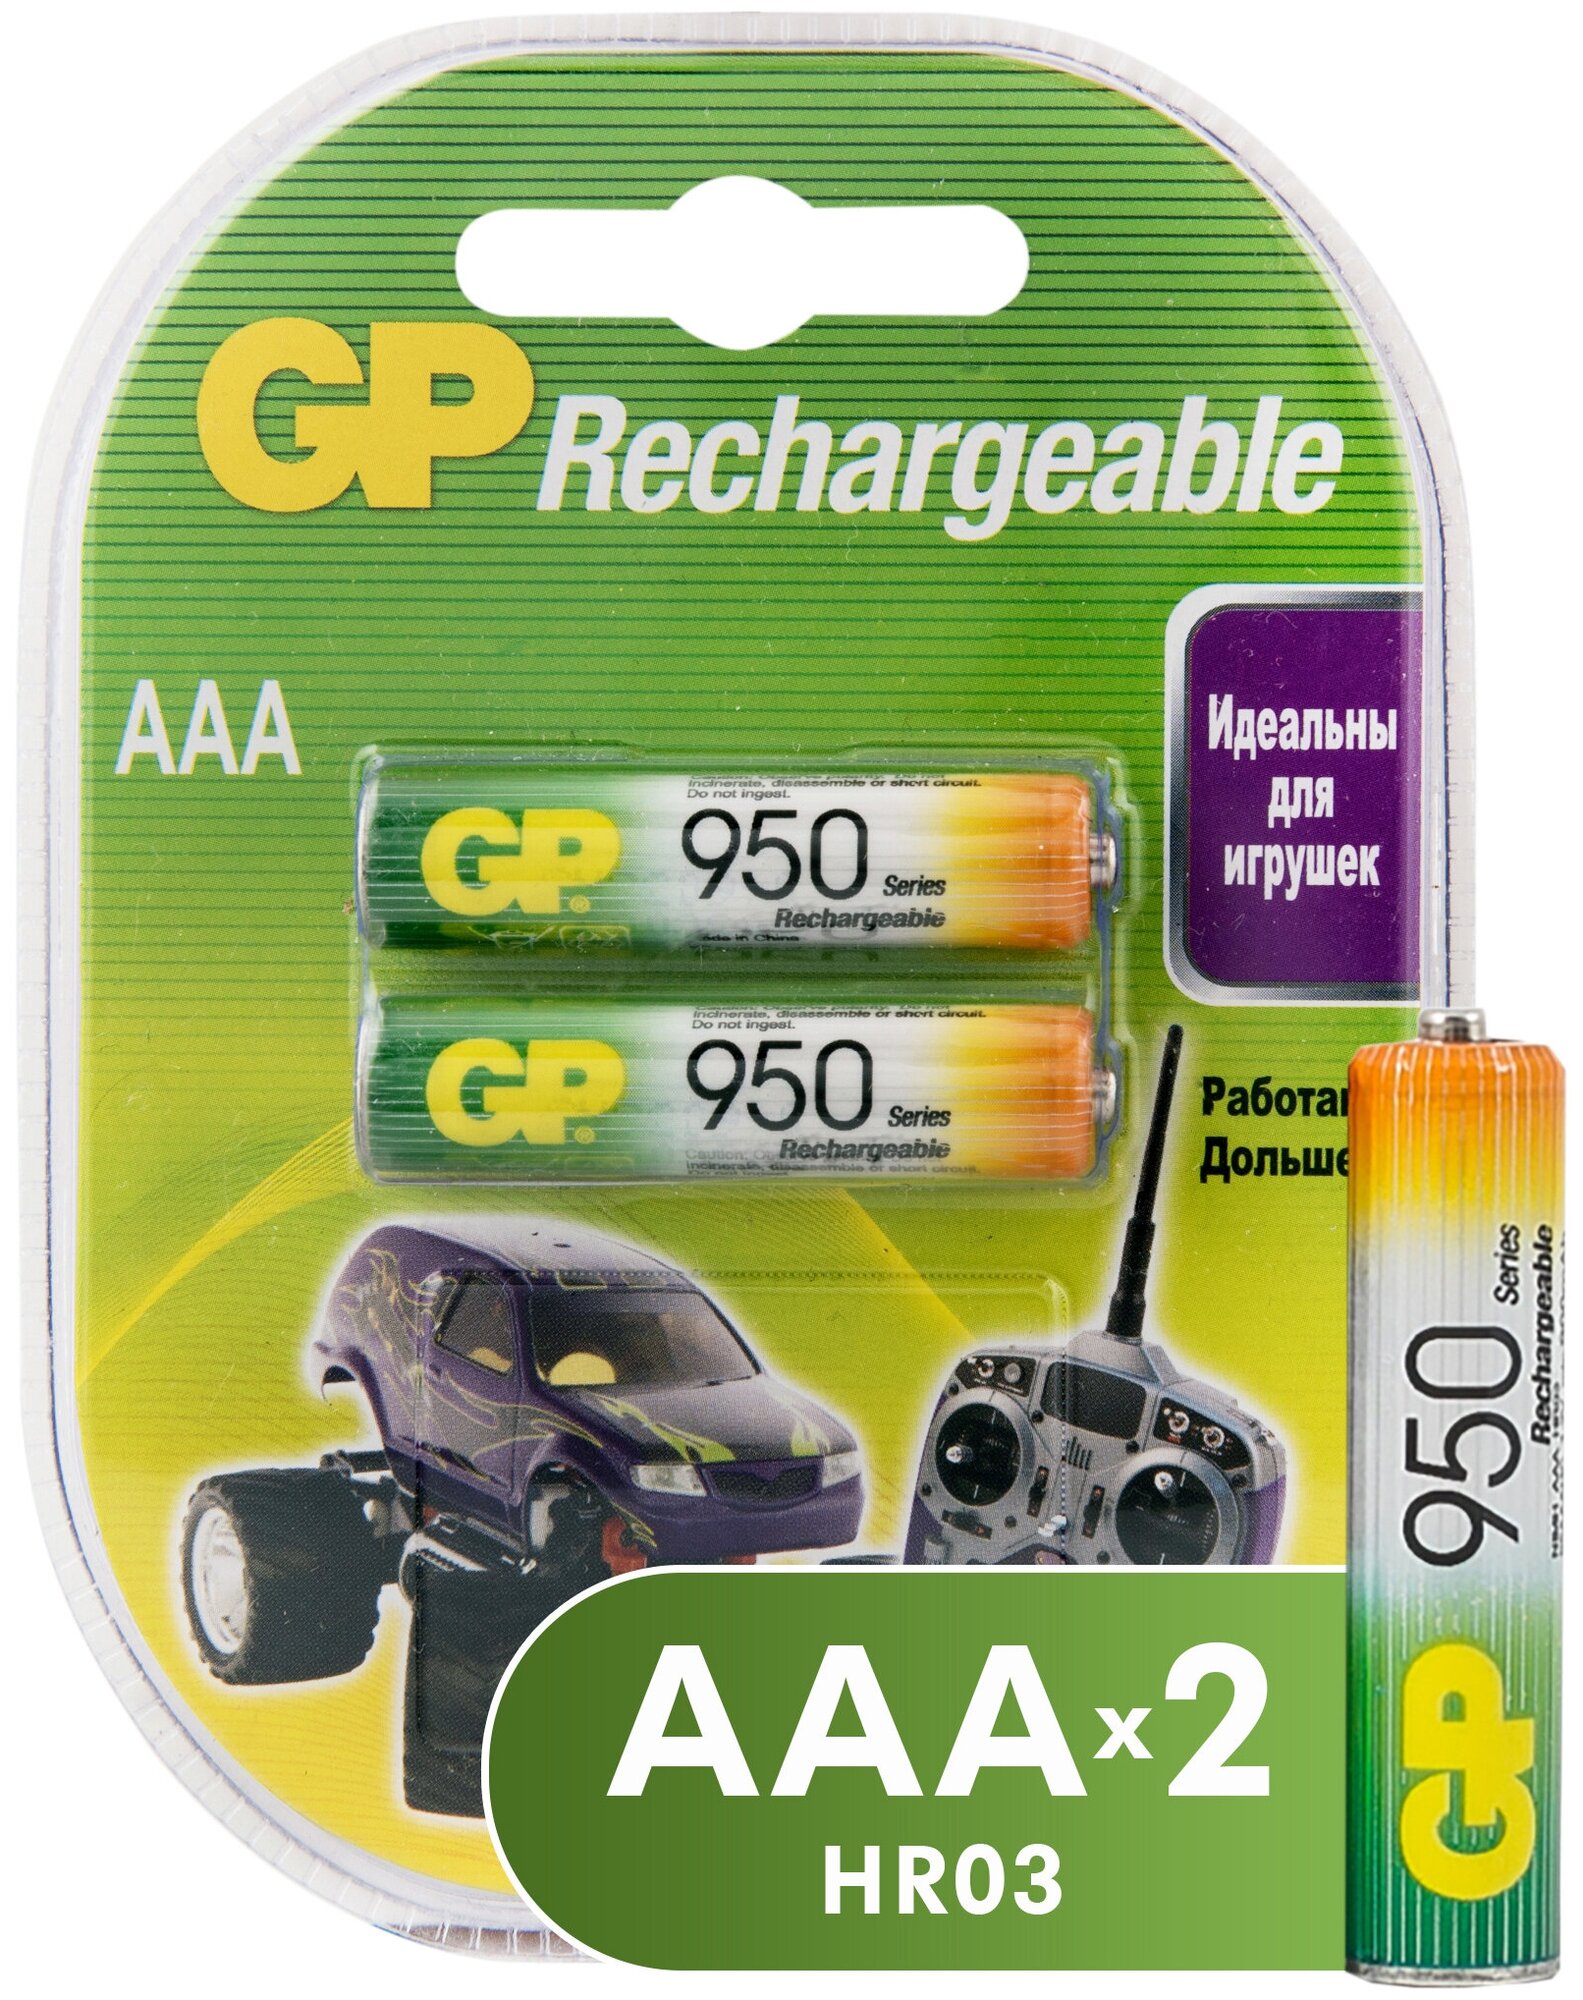 Перезаряжаемые аккумуляторы GP 95AAAHC AAA, емкость 950 мАч (Rechargeable 950 Series AAA) - 2 шт. в клемшеле